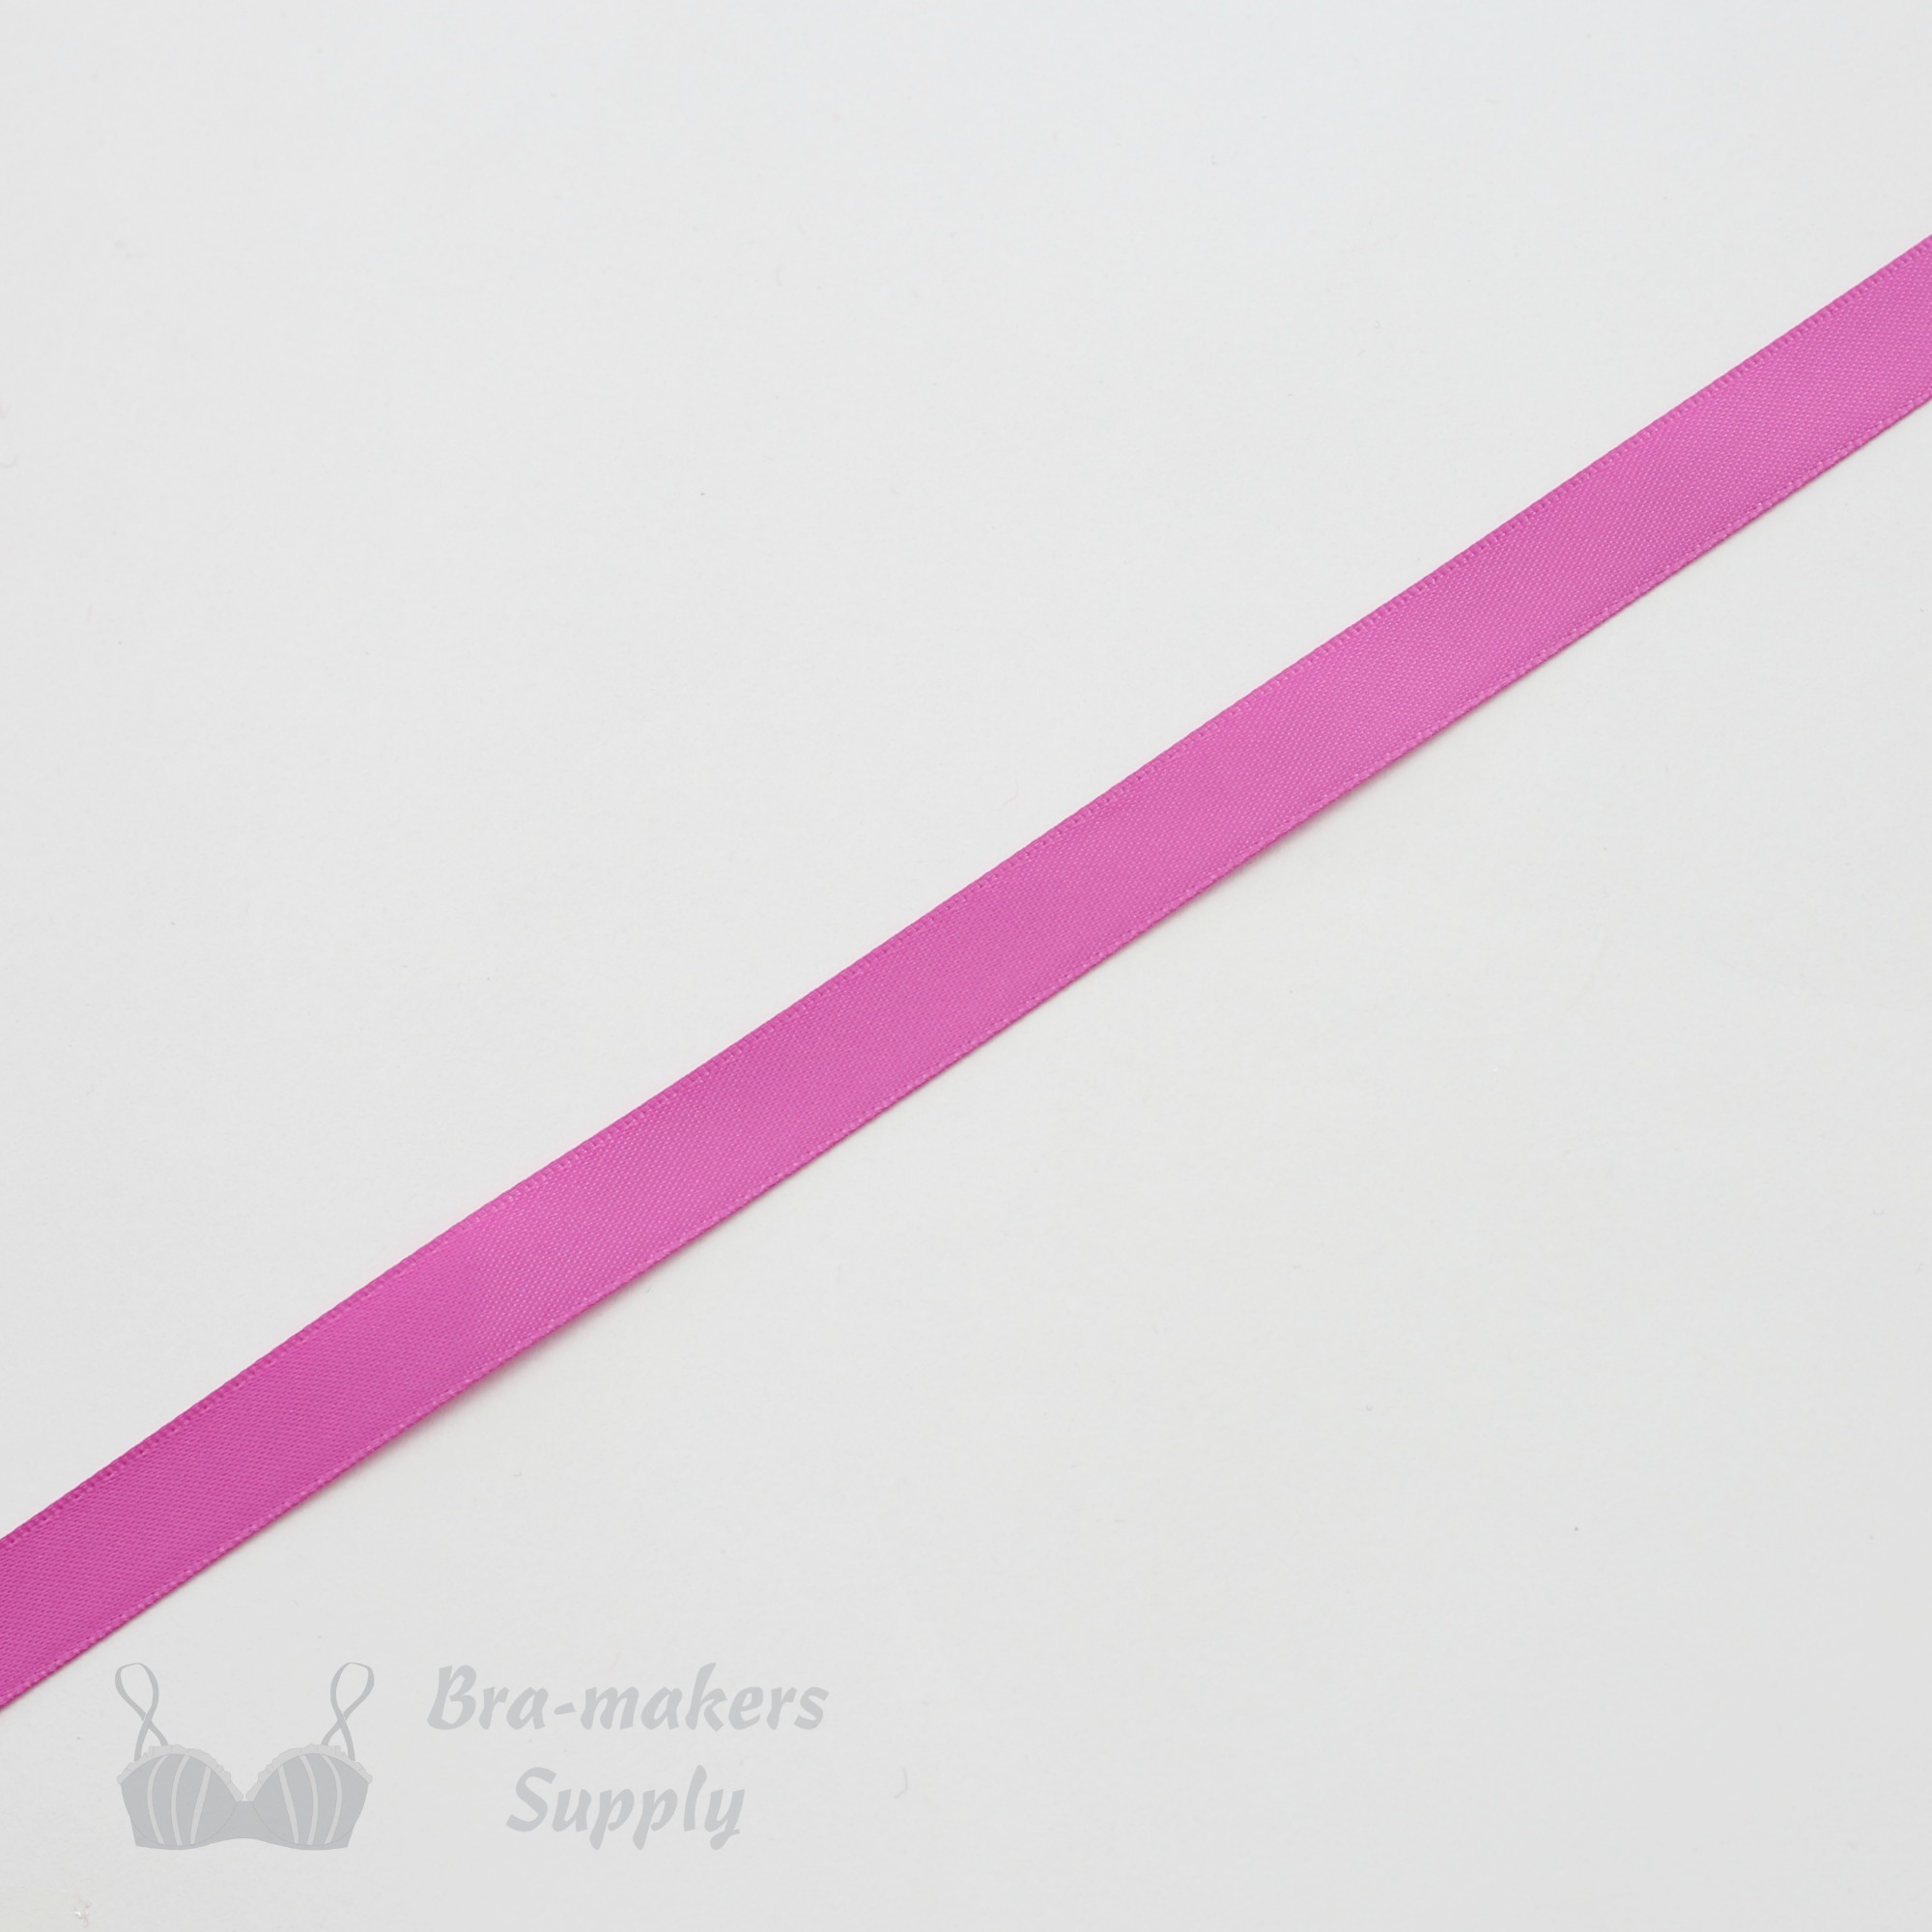 Light Pink Satin Ribbon Bra Straps - 3/8 or 10mm wide - Bra Making  Lingerie DIY - 1 Pair/2 Pieces 